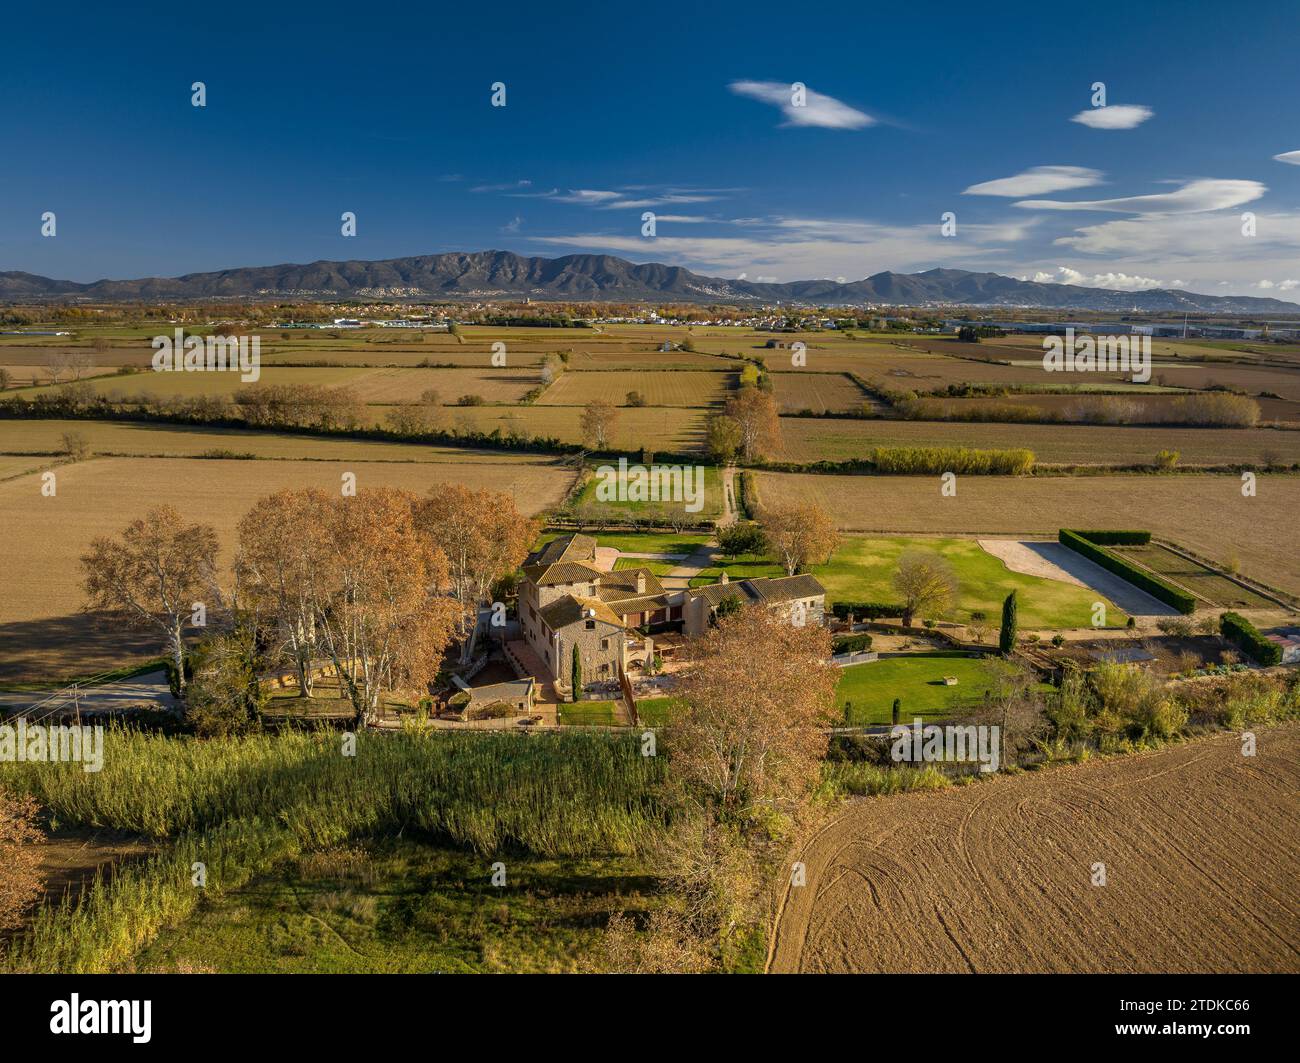 Aerial view of rural environments and fields near Fortià and the Aiguamolls de l'Empordà (wetlands) (Alt Empordà, Girona, Catalonia, Spain) Stock Photo